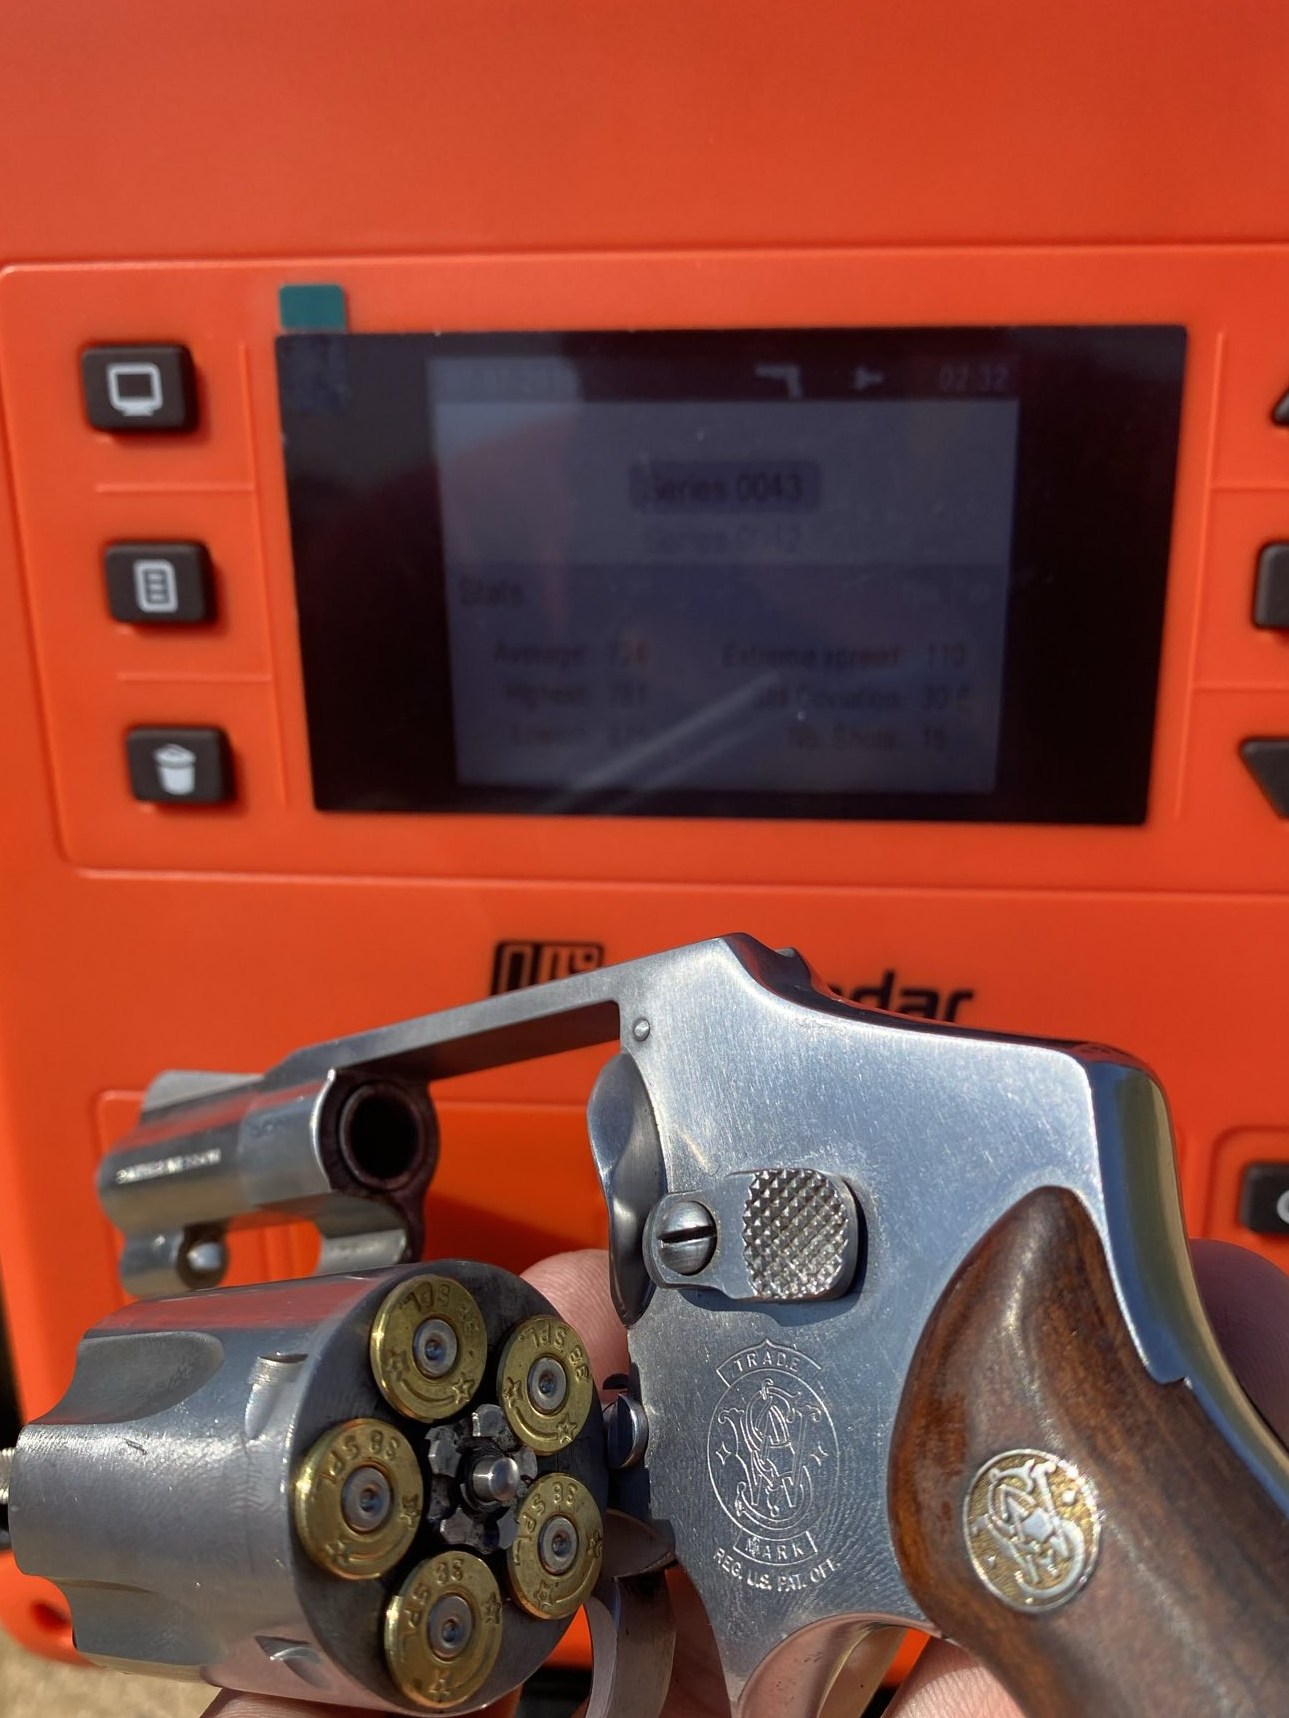 S&W Model 640 J-Frame Revolver Ultimate Defense Wadcutter
Labradar